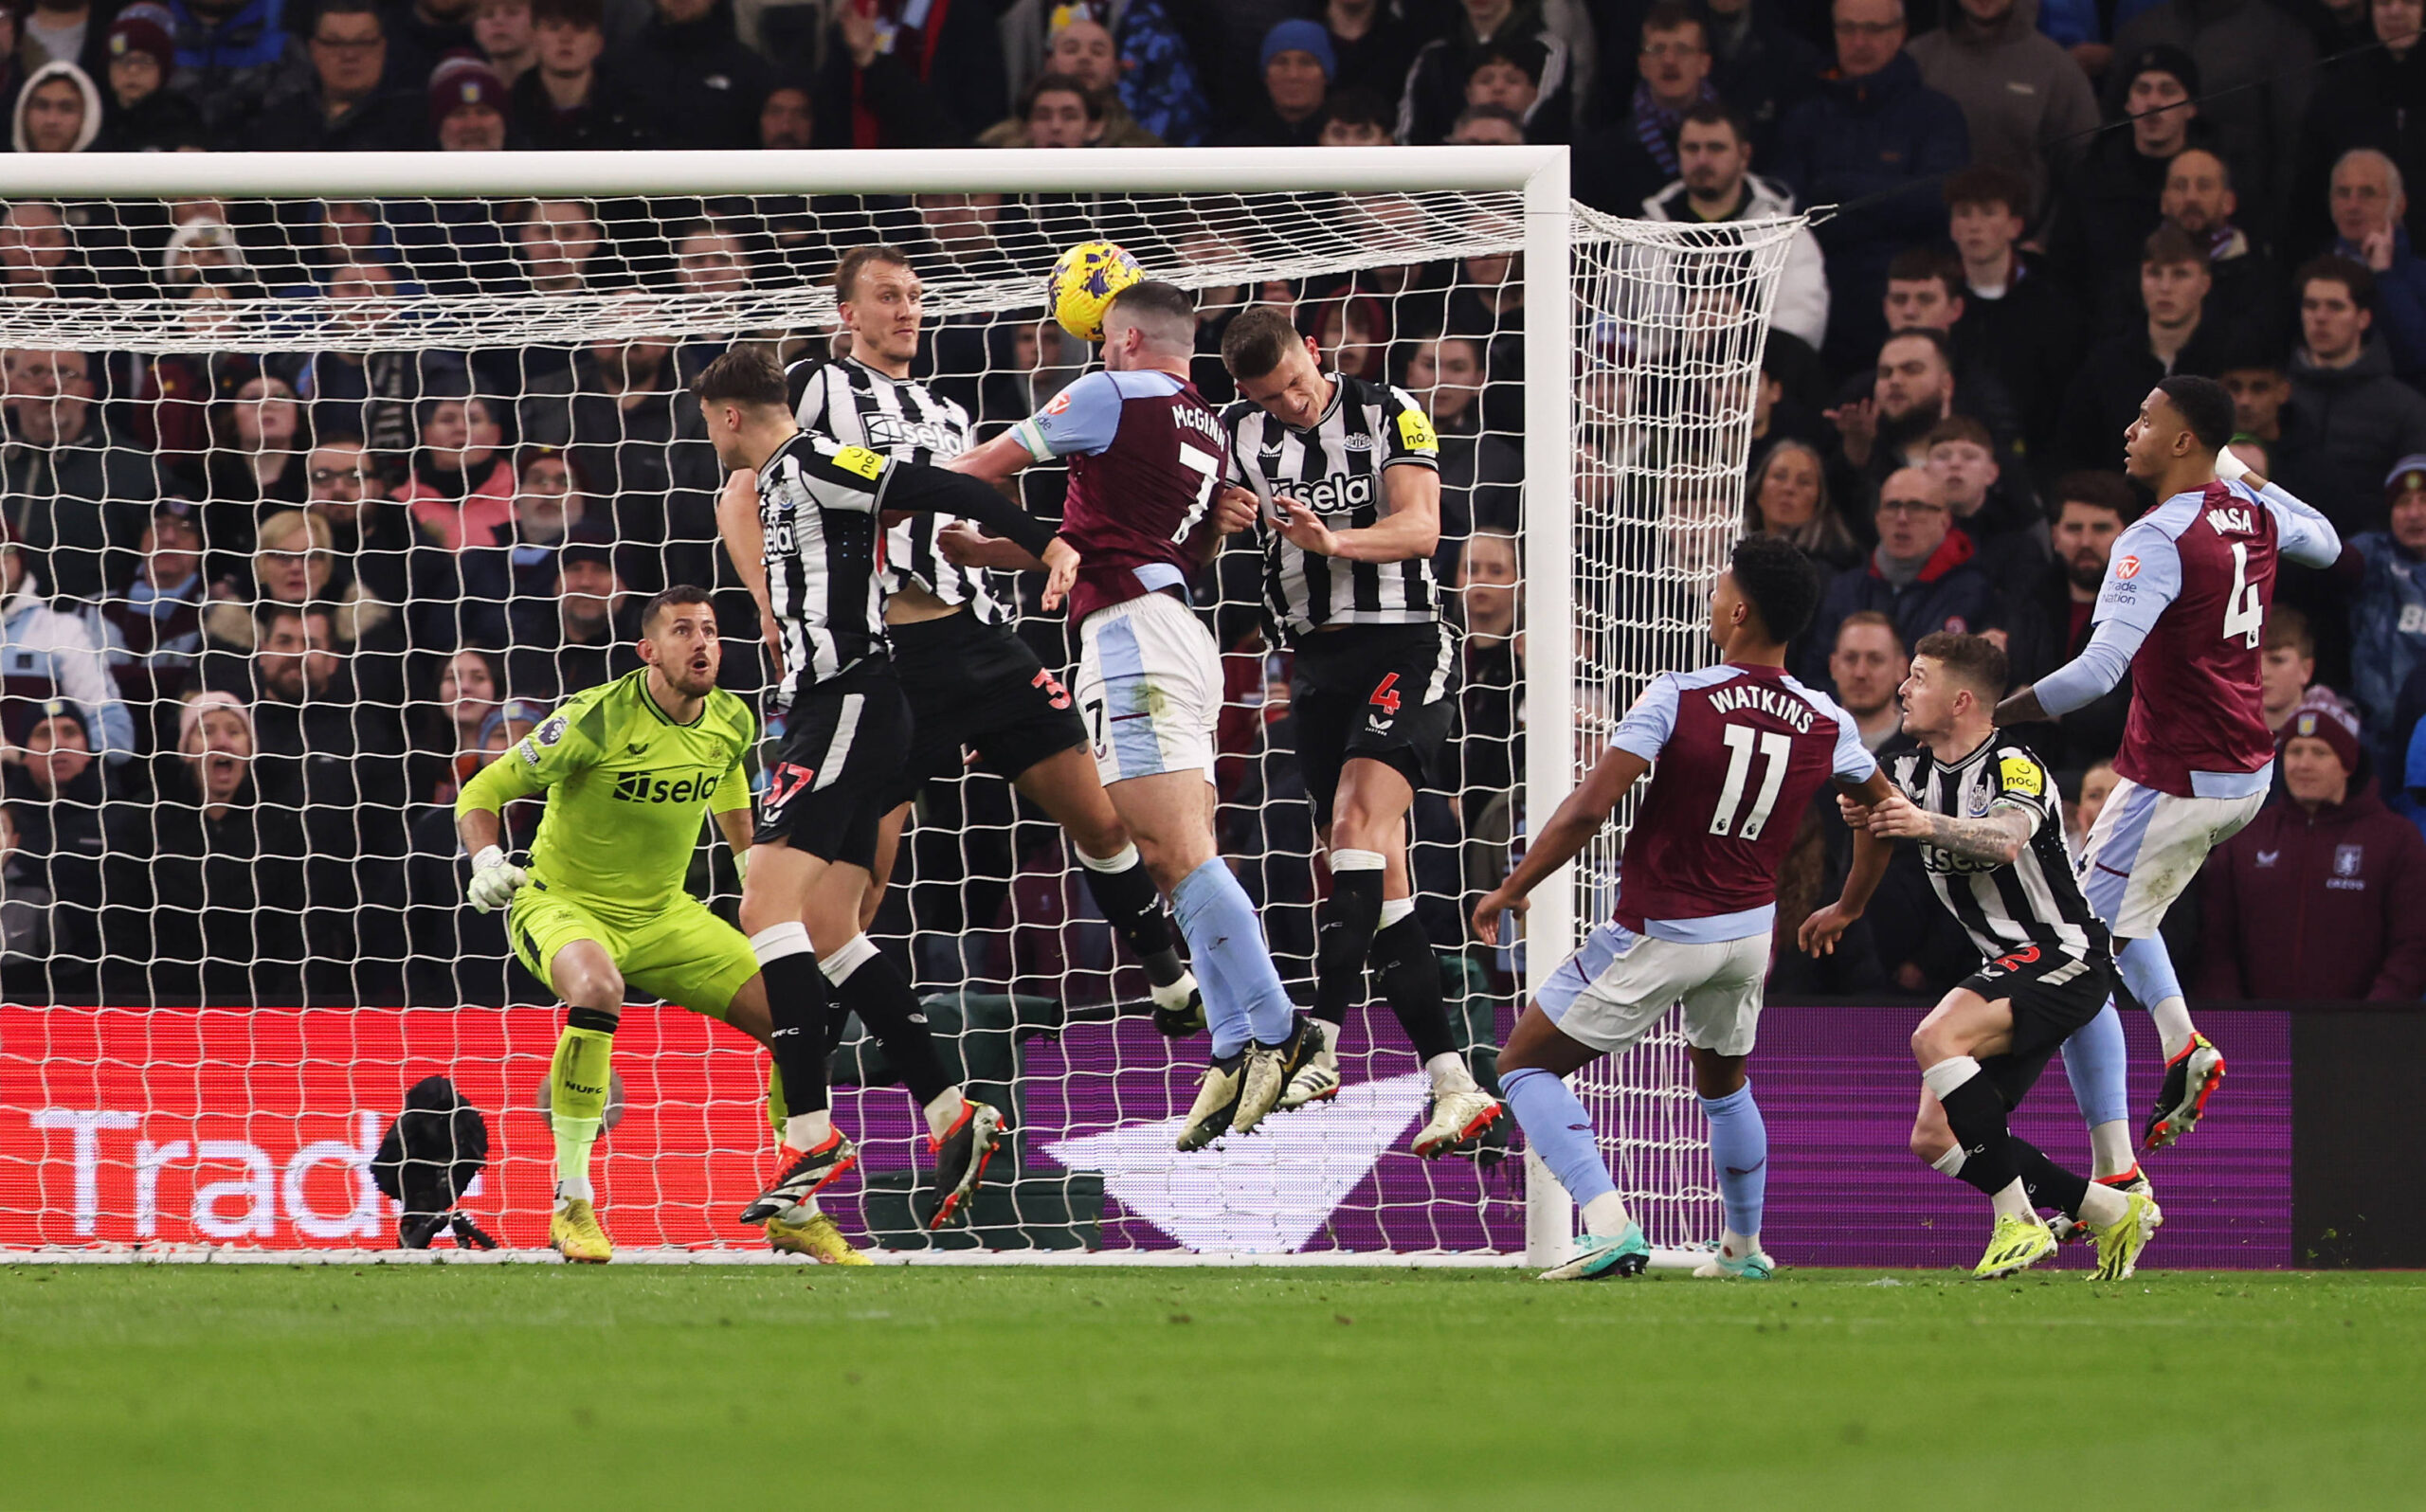 Aston Villa's John McGinn rises to head the ball despite competition from three Newcastle defenders